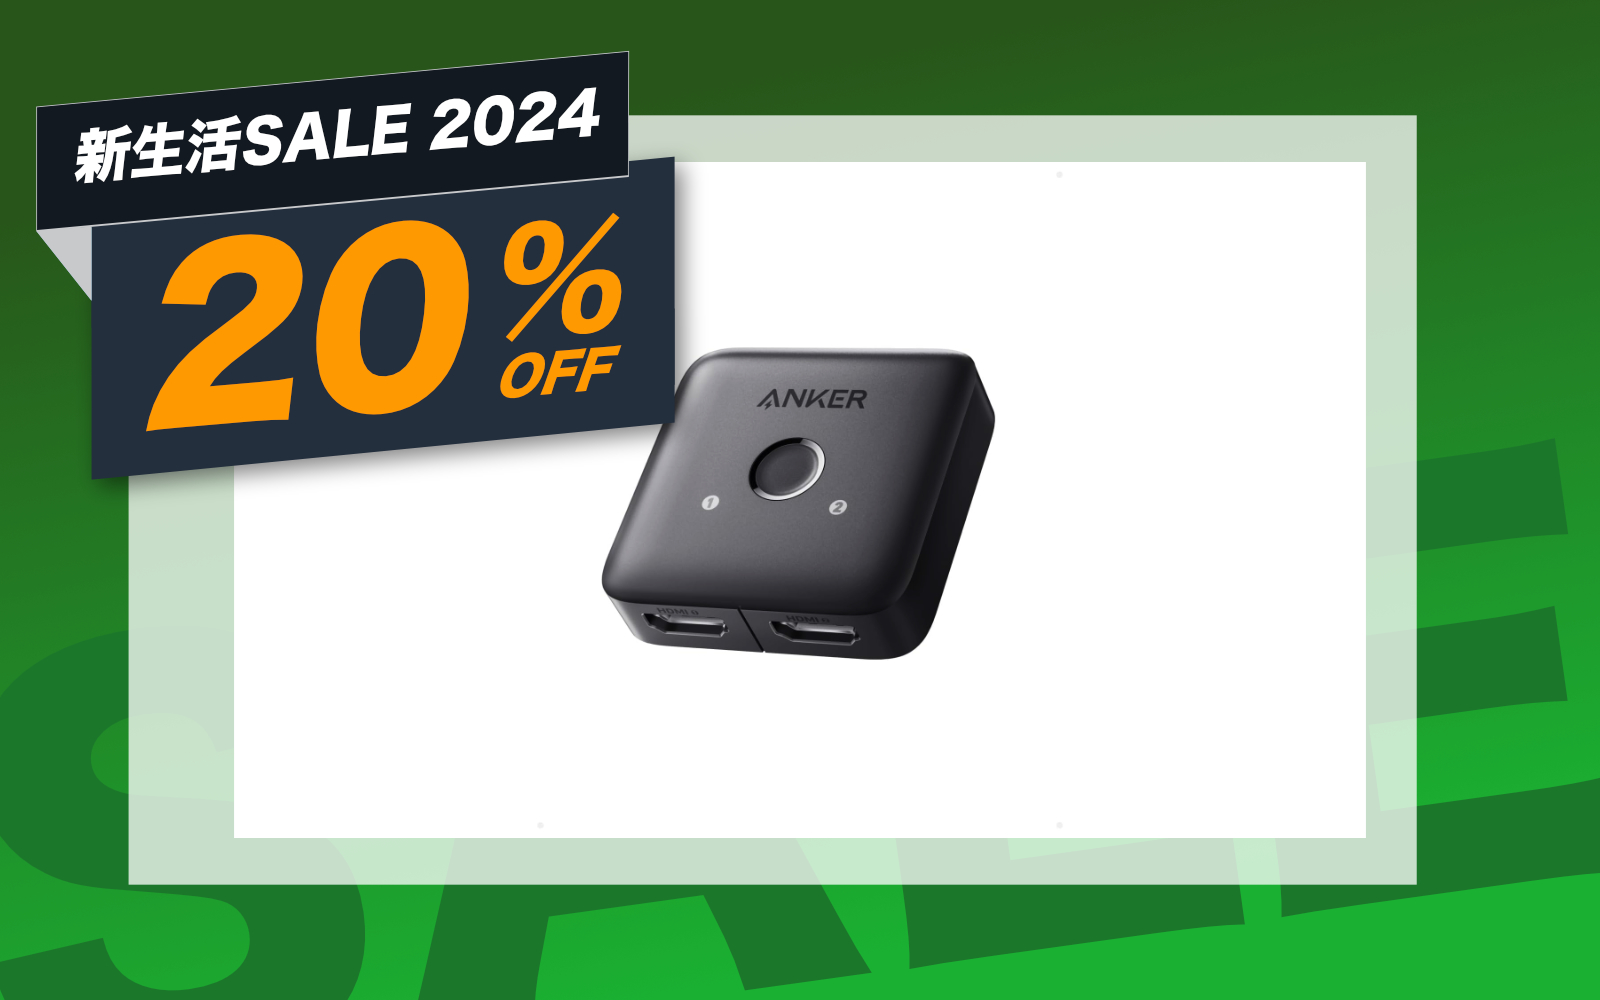 Anker-HDMI-device-on-sale.jpg